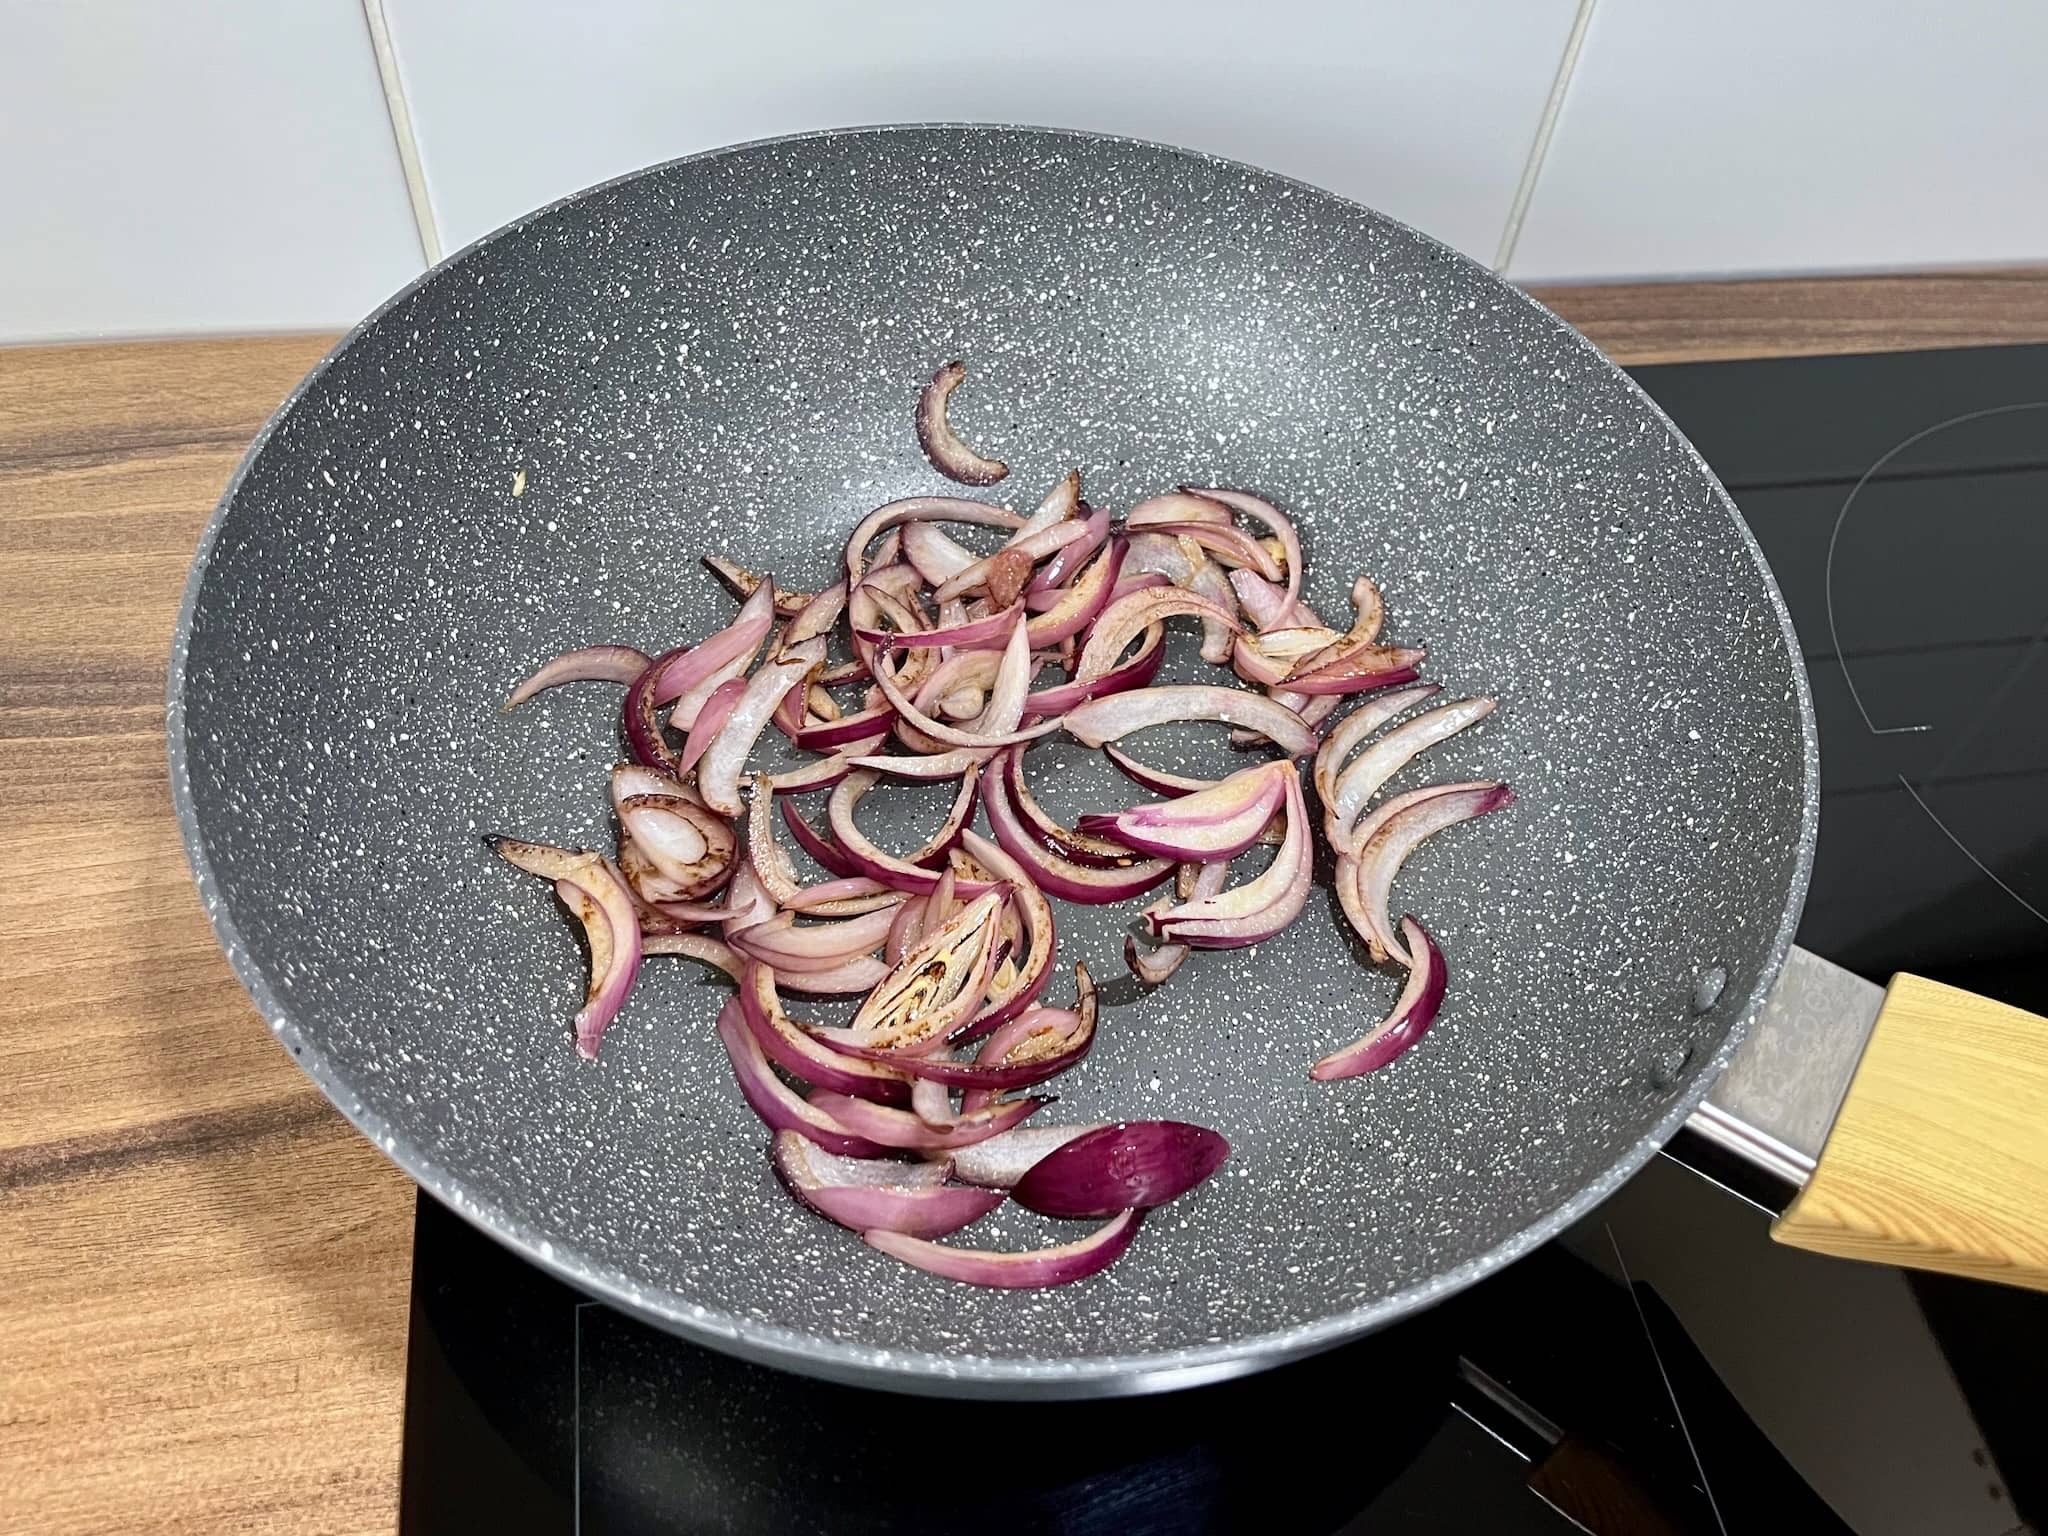 Sautéed onion in a pan